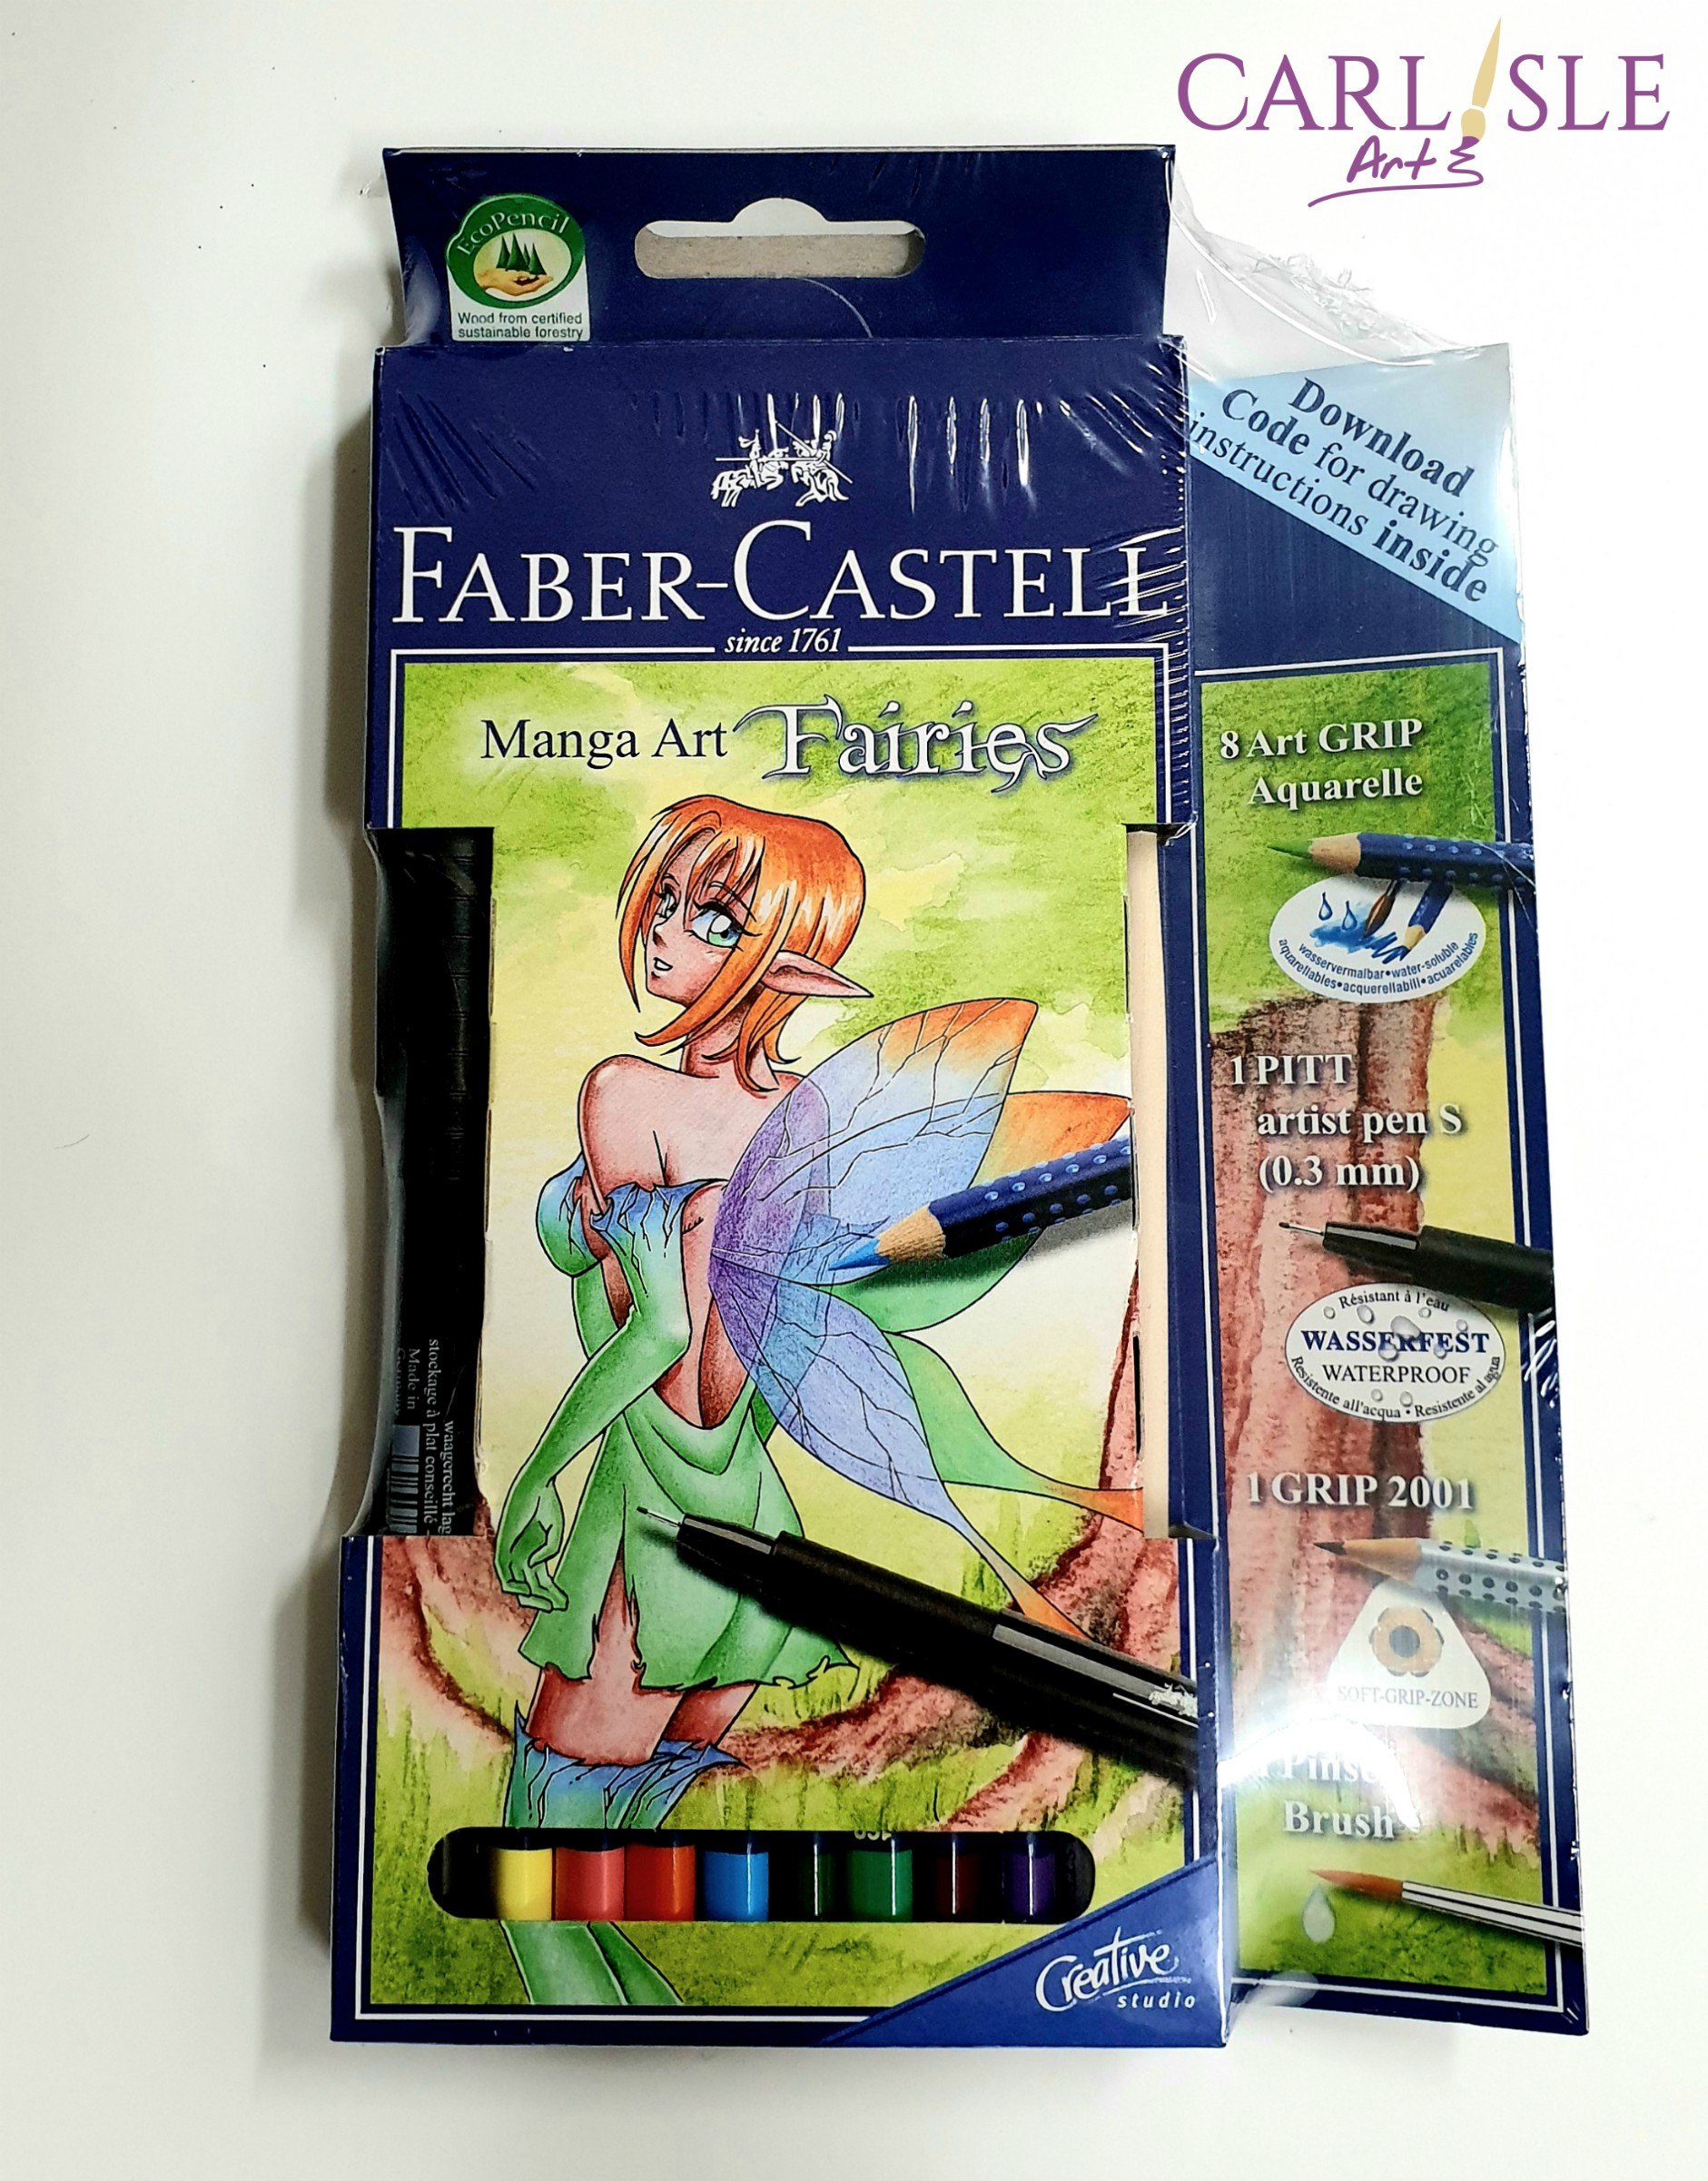 http://www.carlisleart.com.au/database/images/faber-castel-manga-art-fairies-set-main-42163-42163.jpg